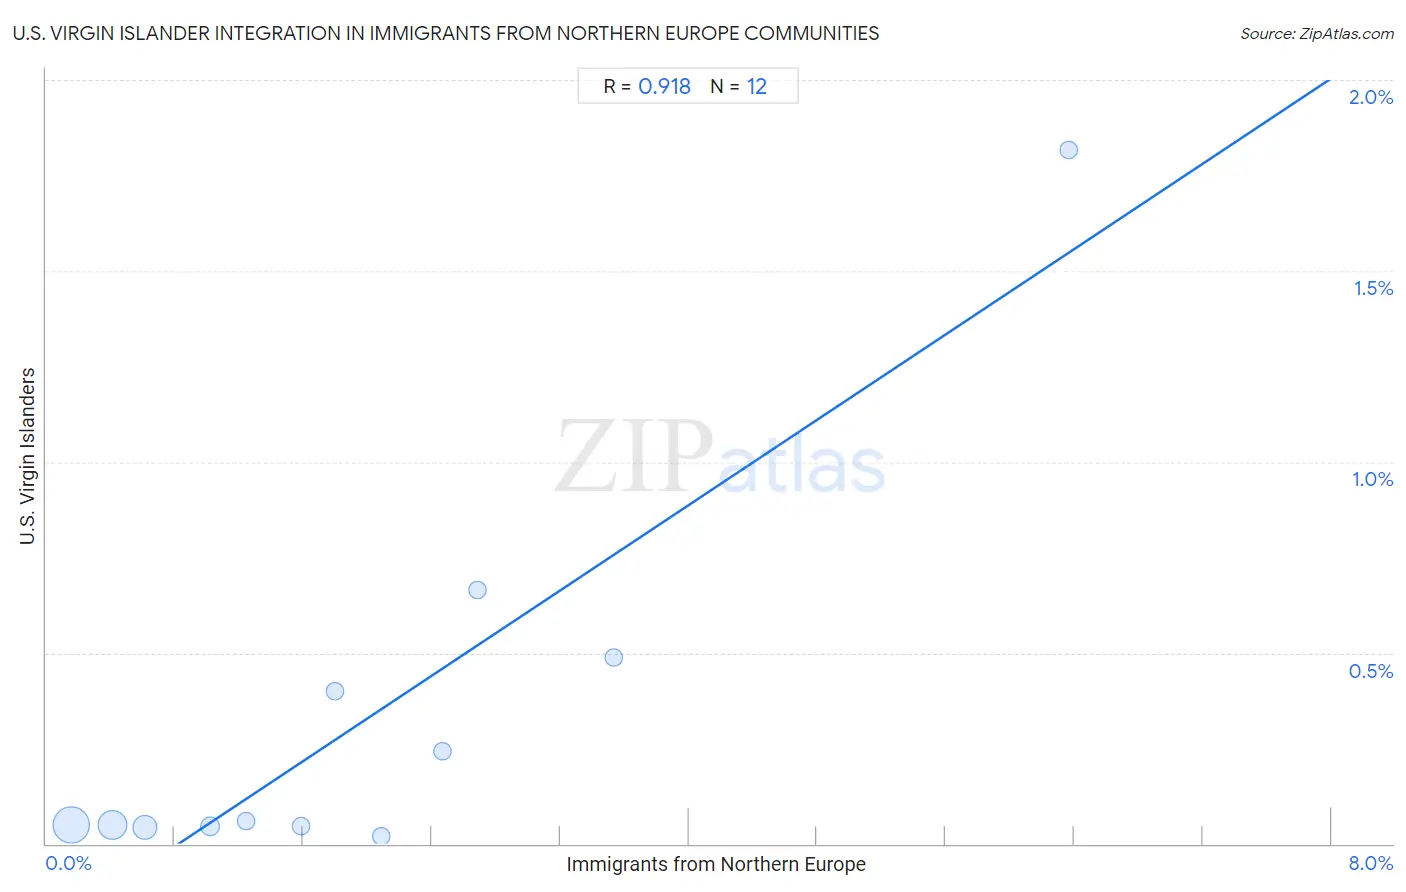 Immigrants from Northern Europe Integration in U.S. Virgin Islander Communities